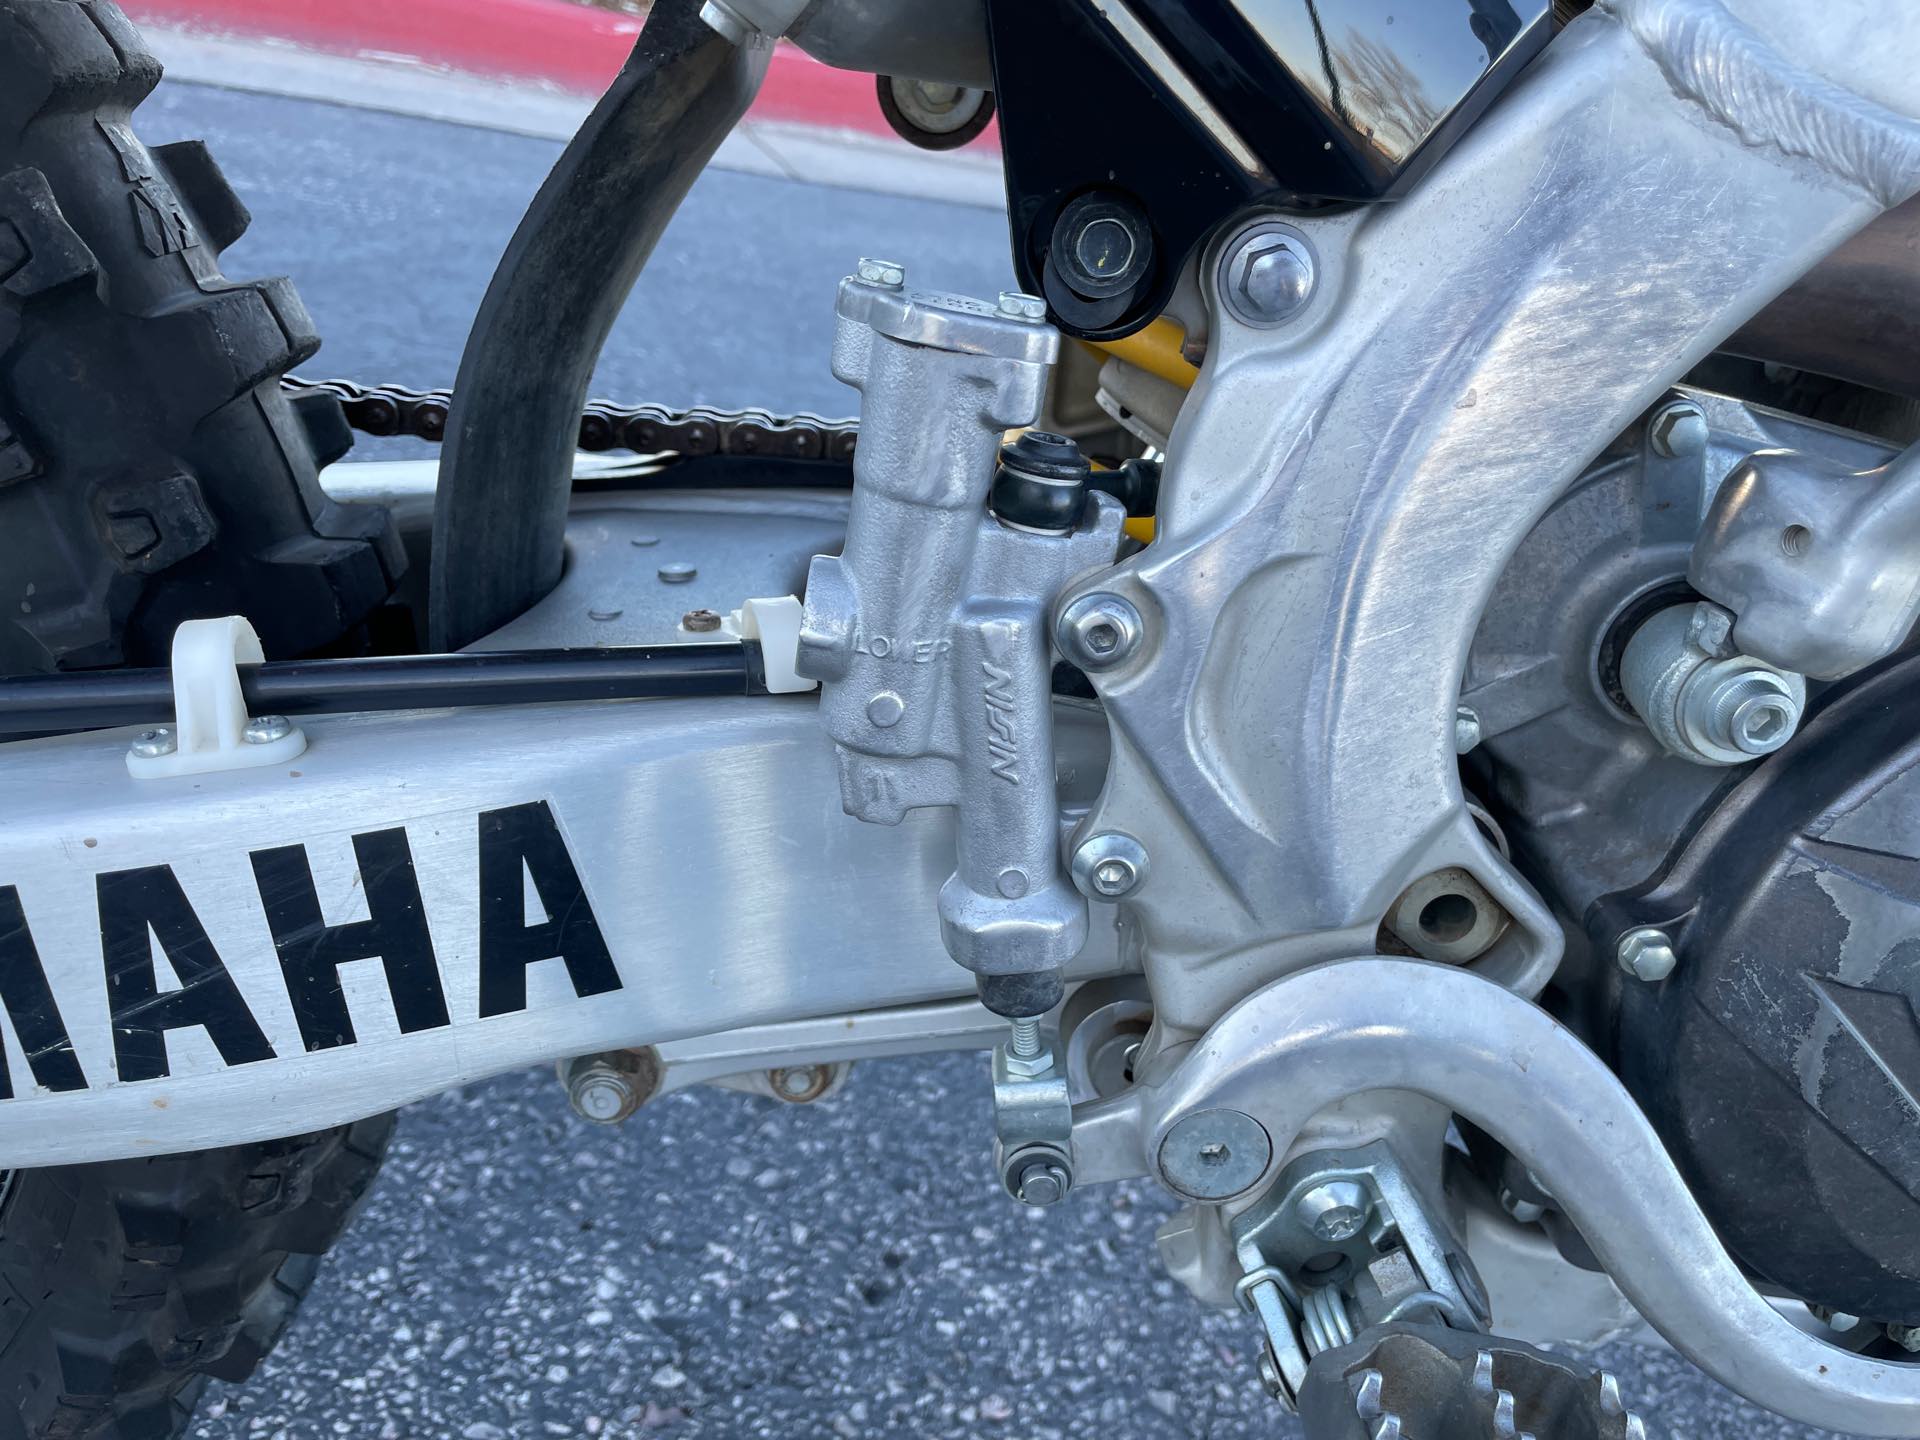 2016 Yamaha YZ 450F at Mount Rushmore Motorsports